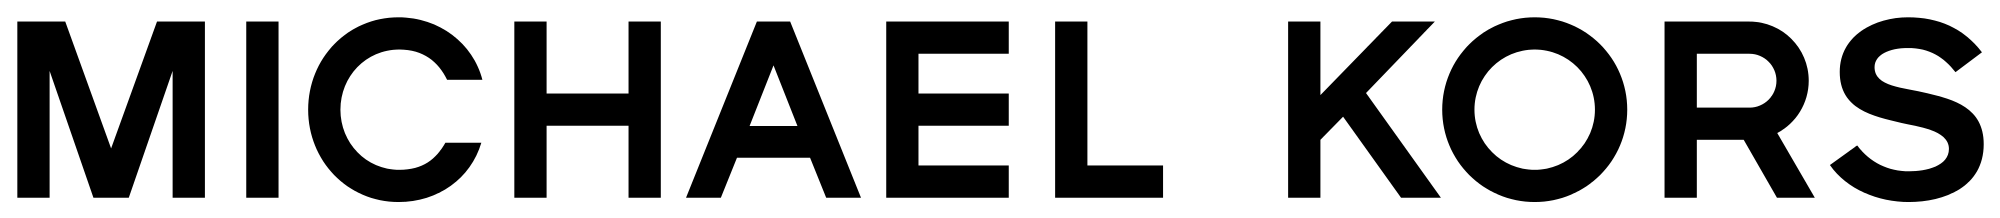 michael kors logo vector